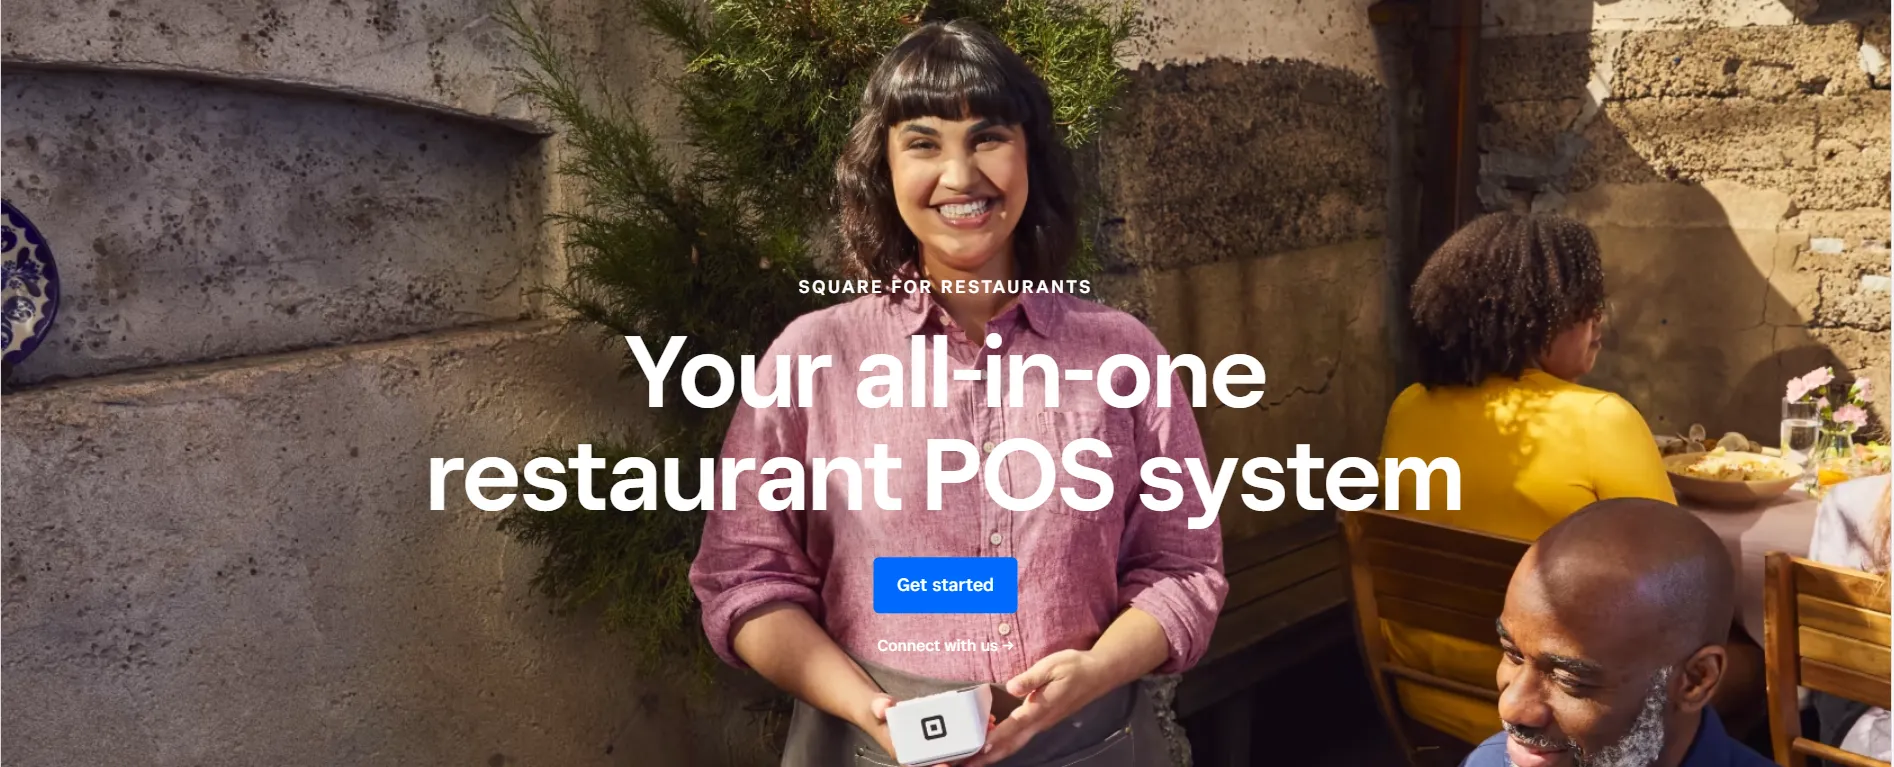 best website builders for restaurants Square online